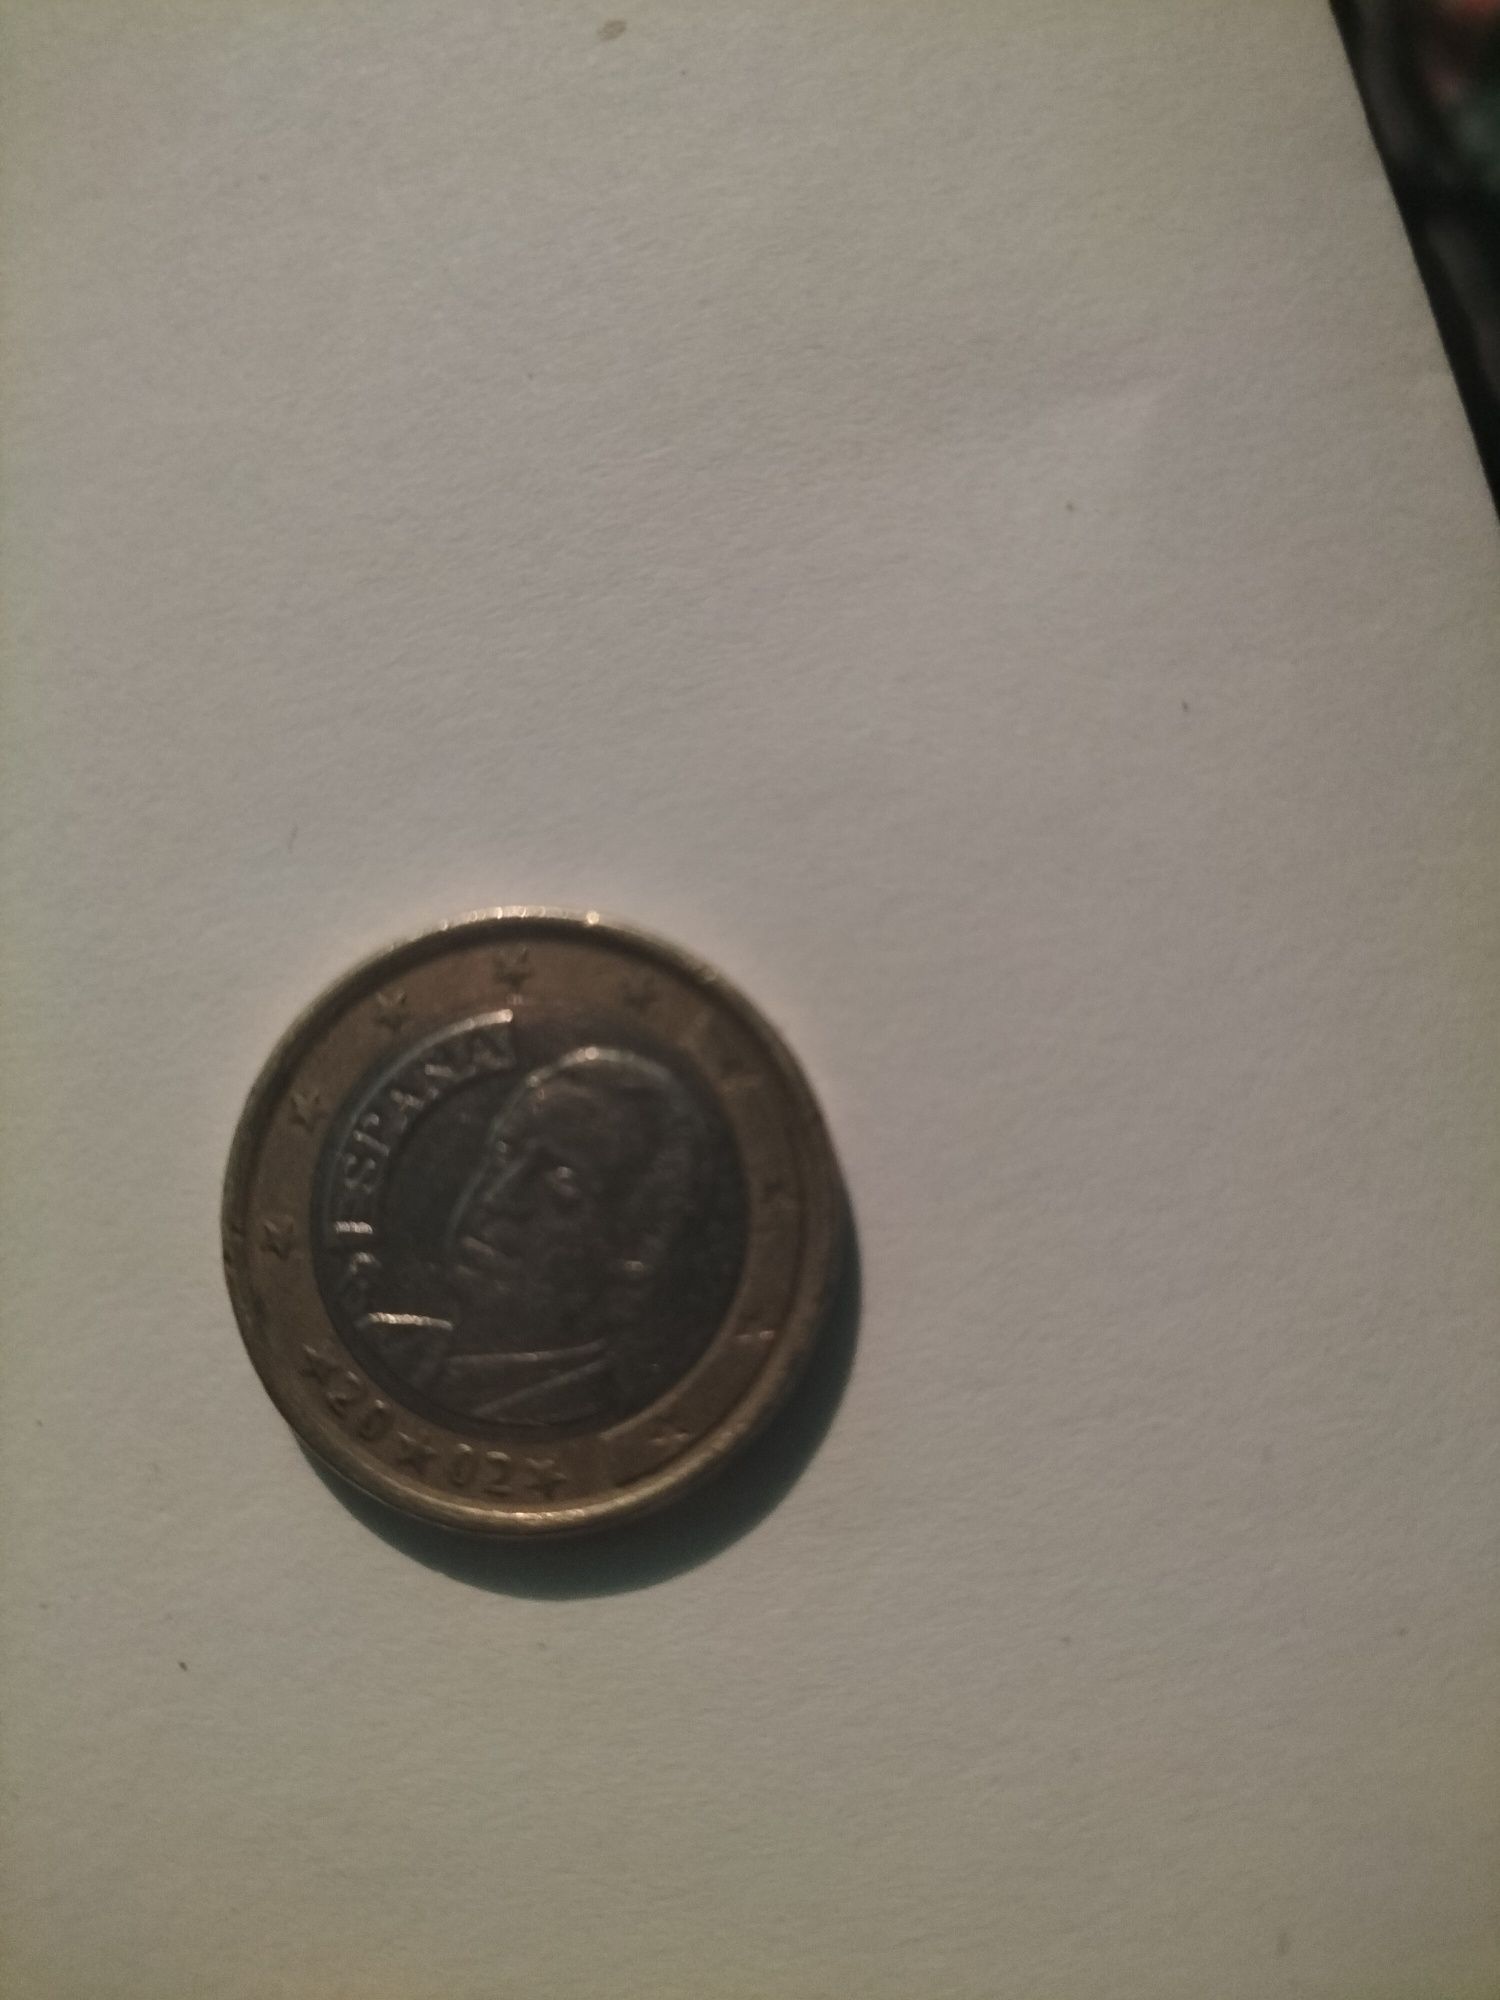 Monede vechi din 2002 de 1 euro și 20 centi